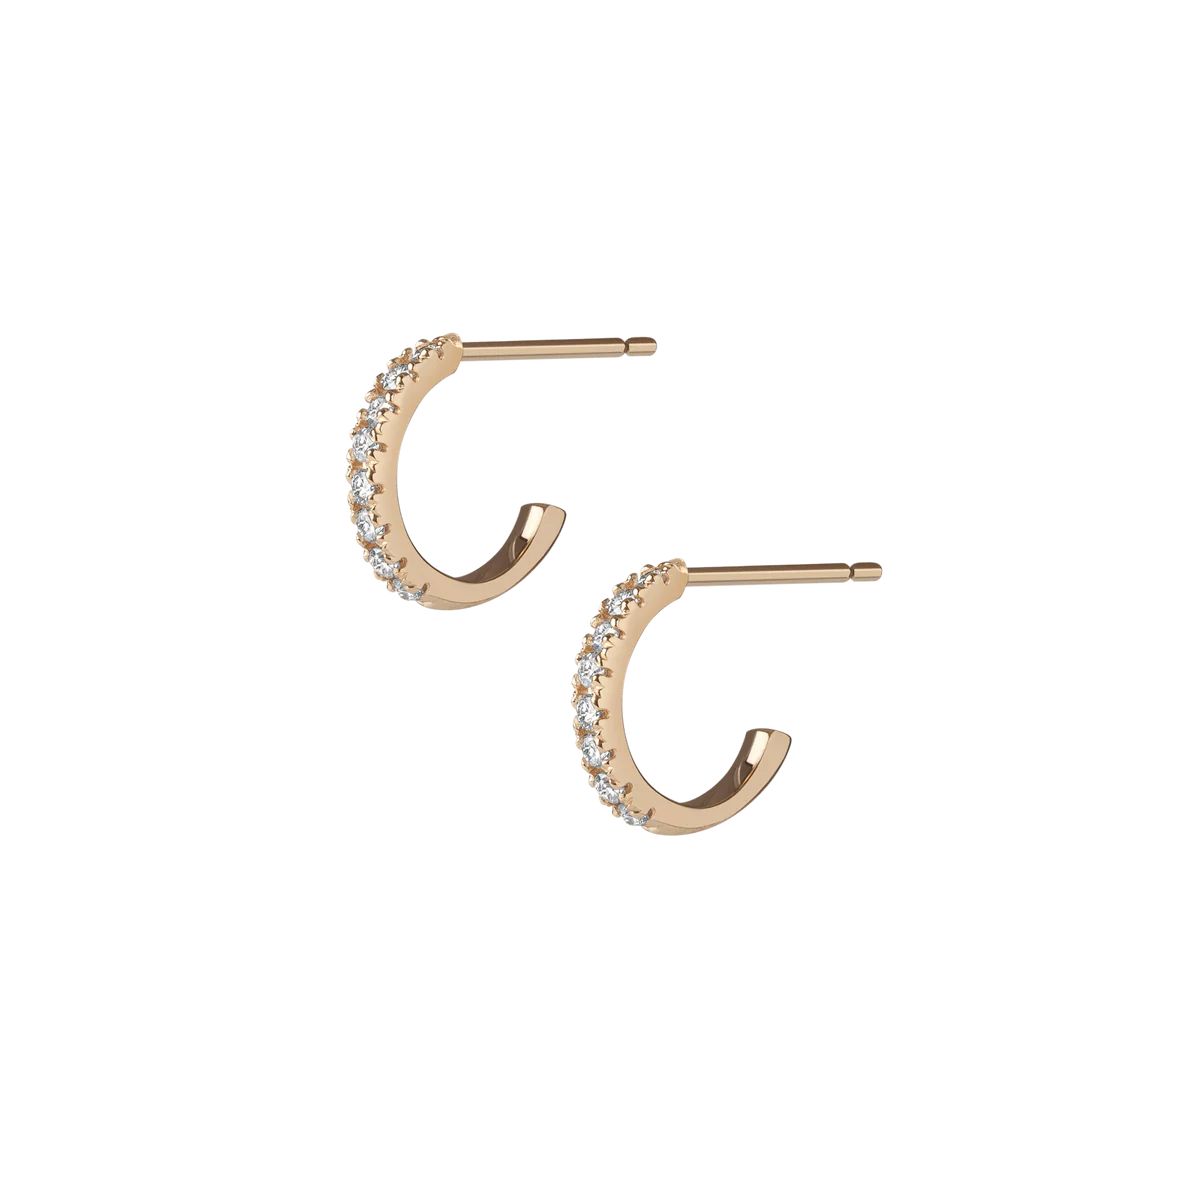 Huggie Earrings with White Diamonds | AUrate New York